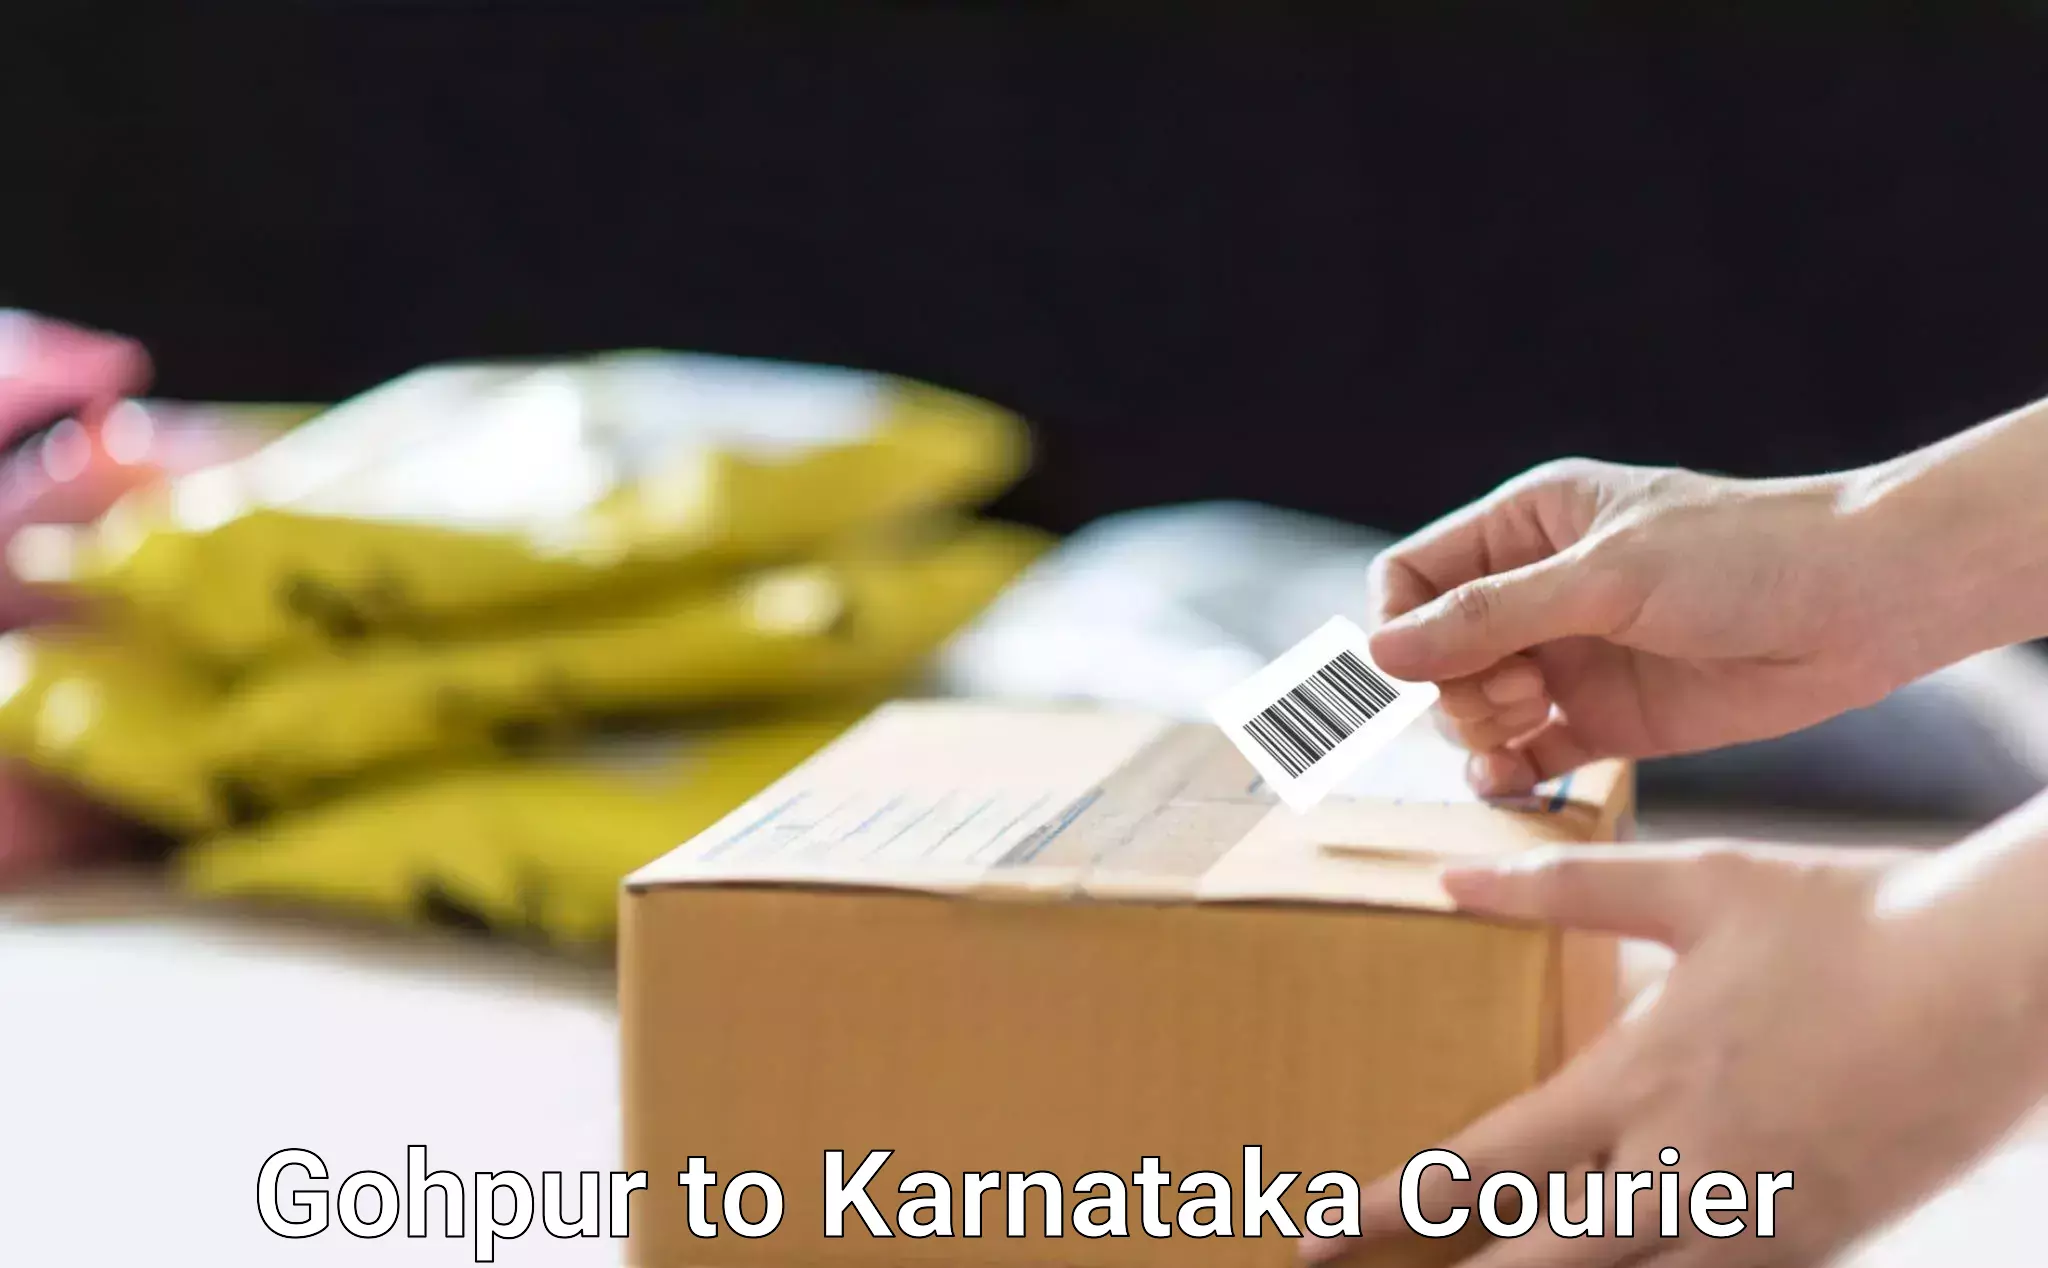 Bulk courier orders Gohpur to Harugeri